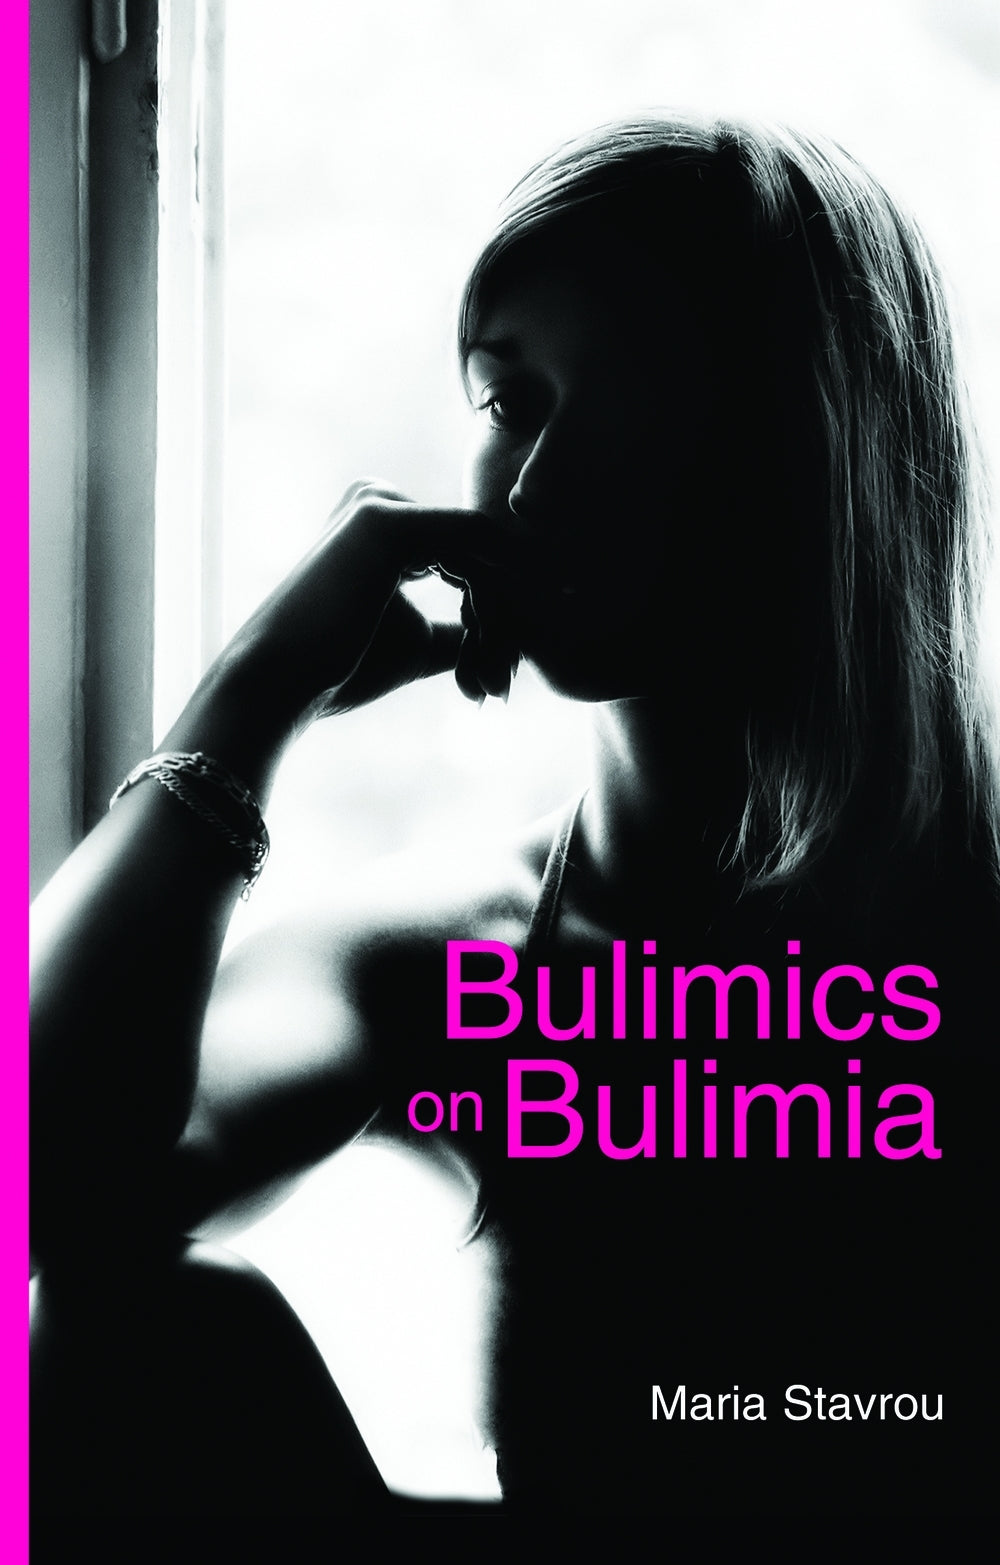 Bulimics on Bulimia by Maria Stavrou